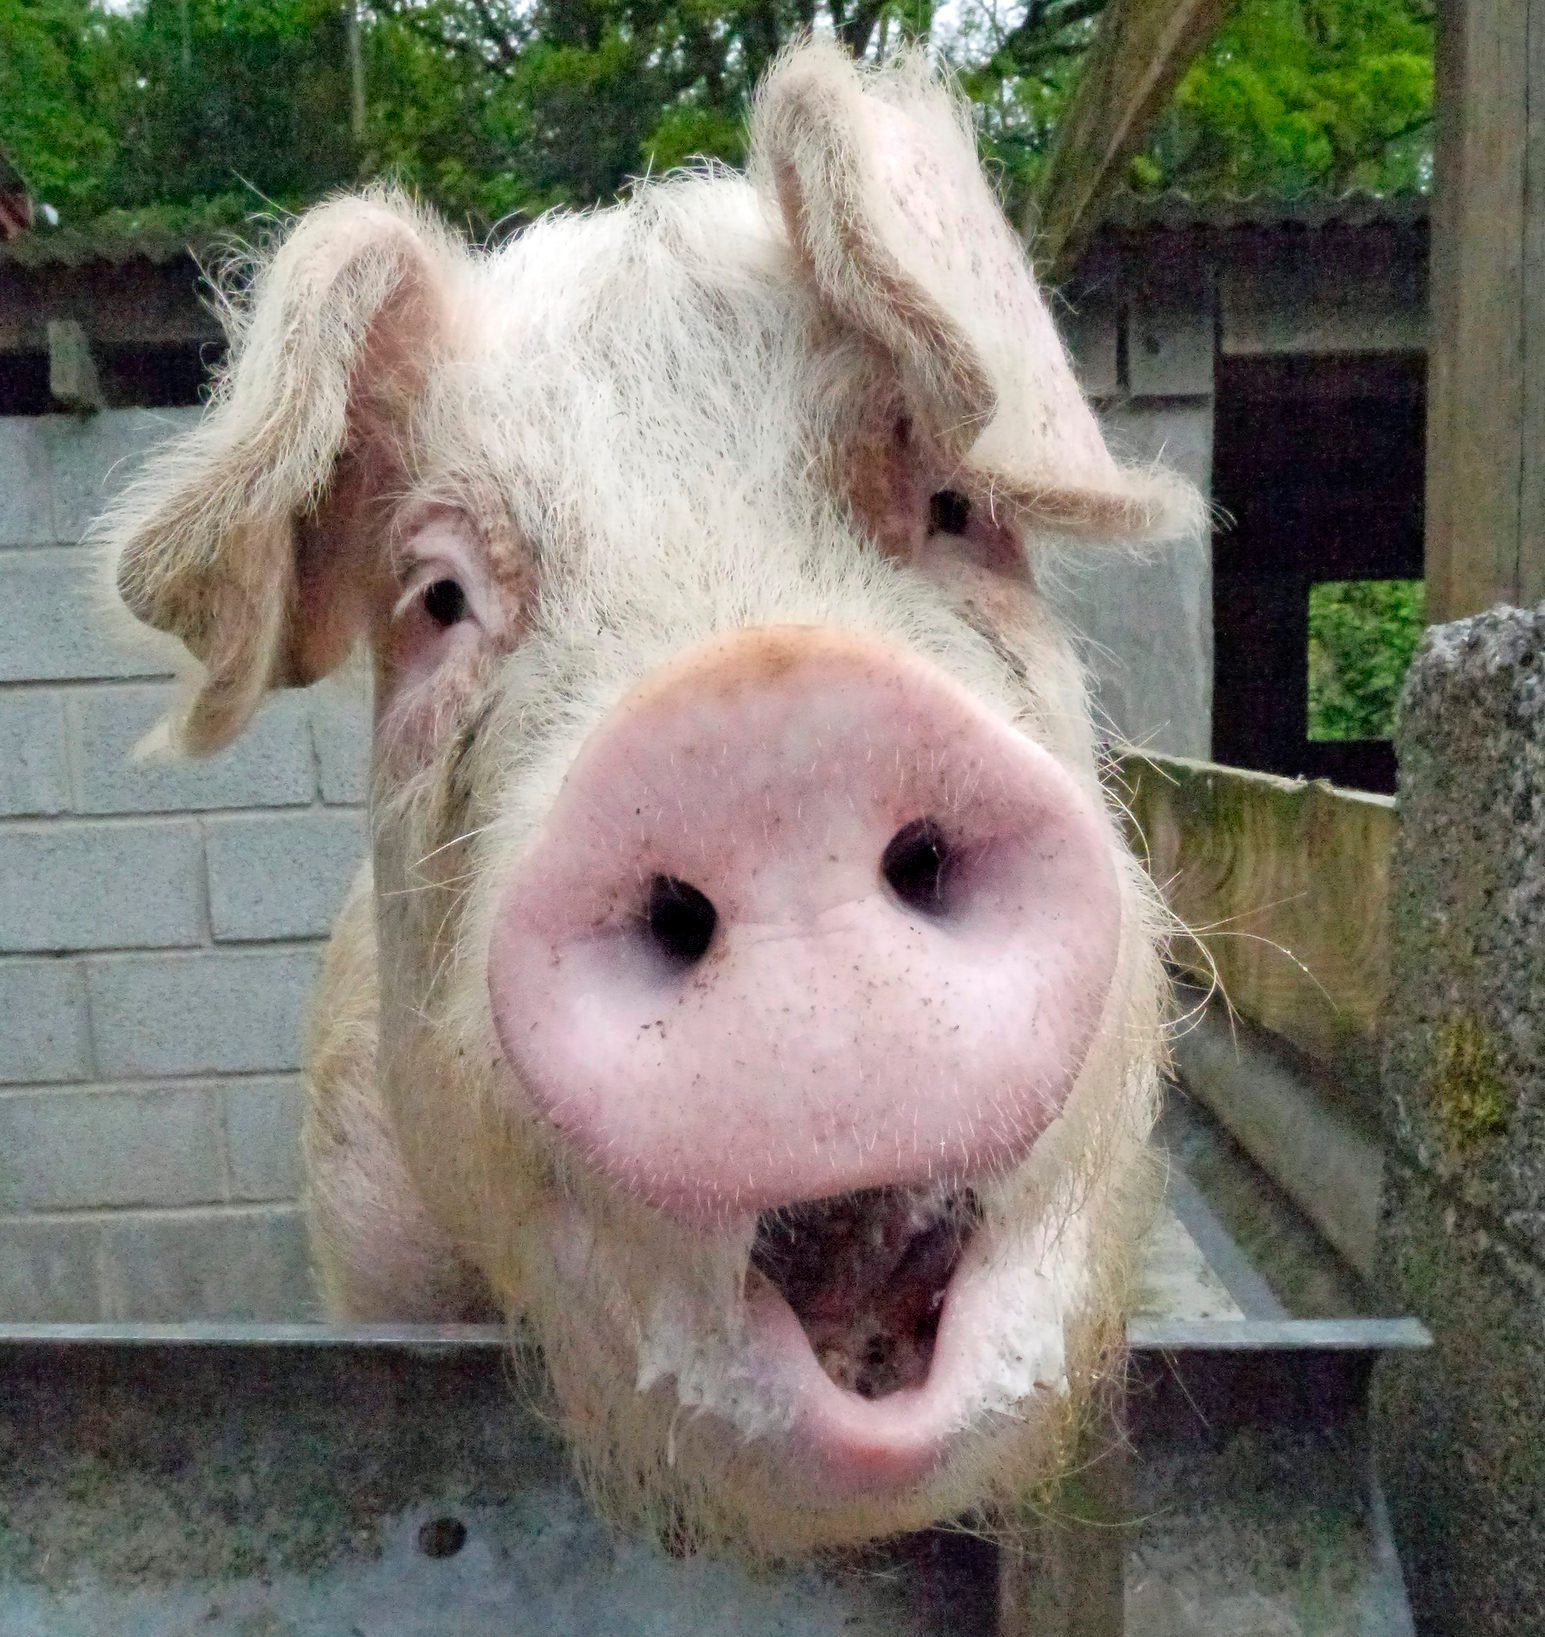 close up of pig snout